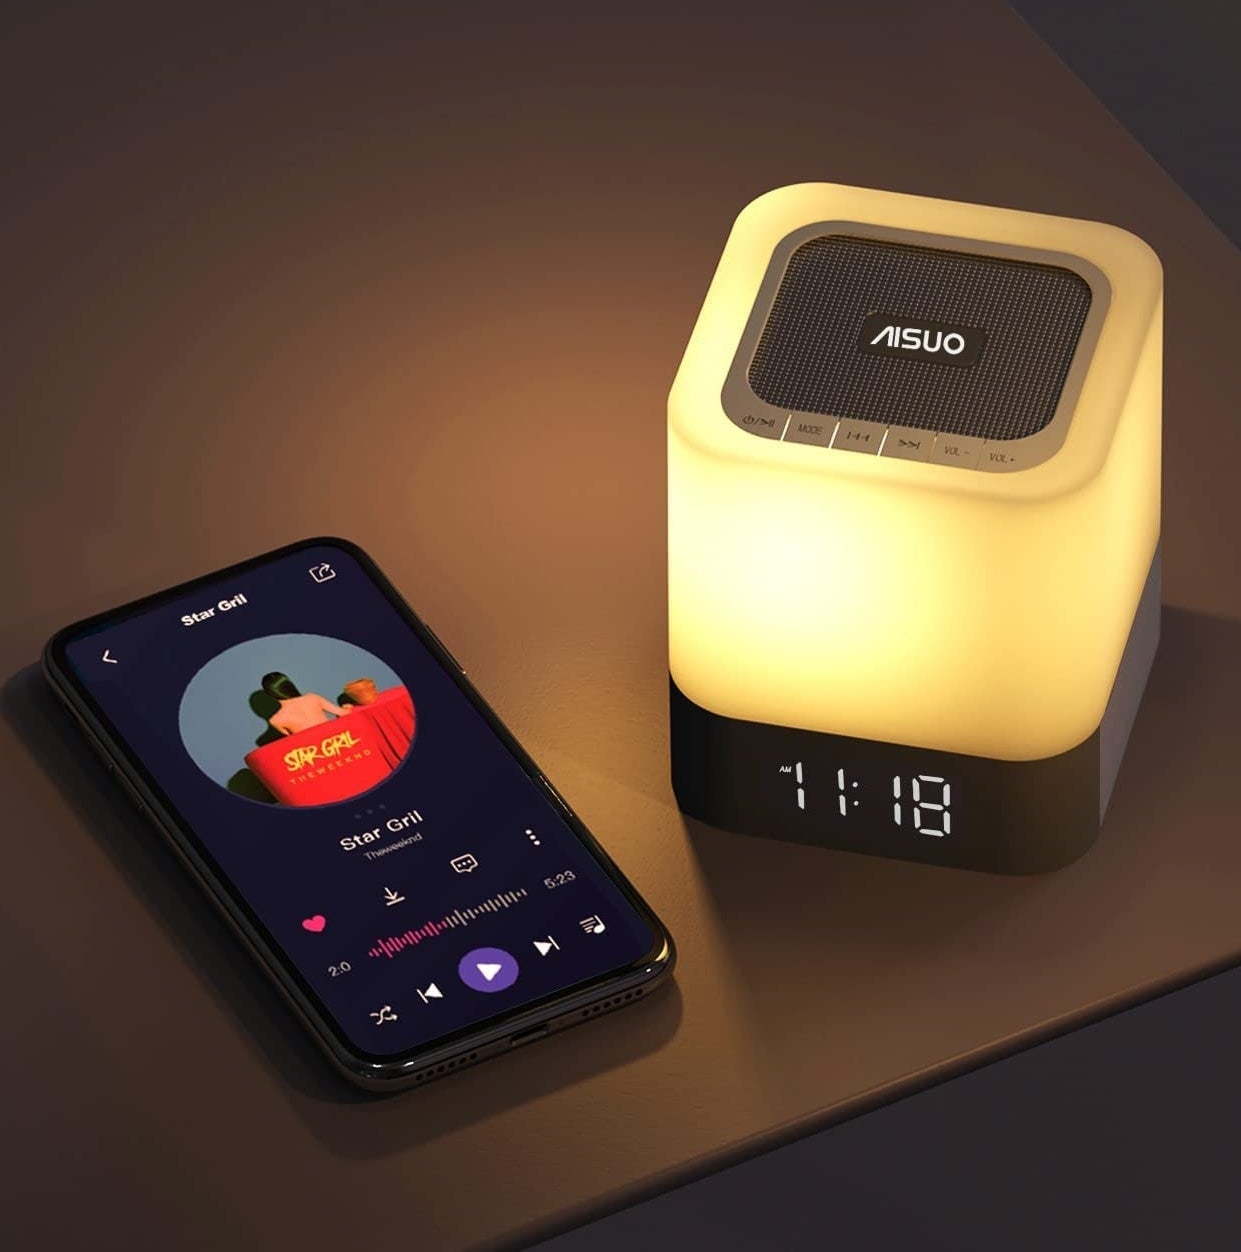 A phone beside the alarm clock